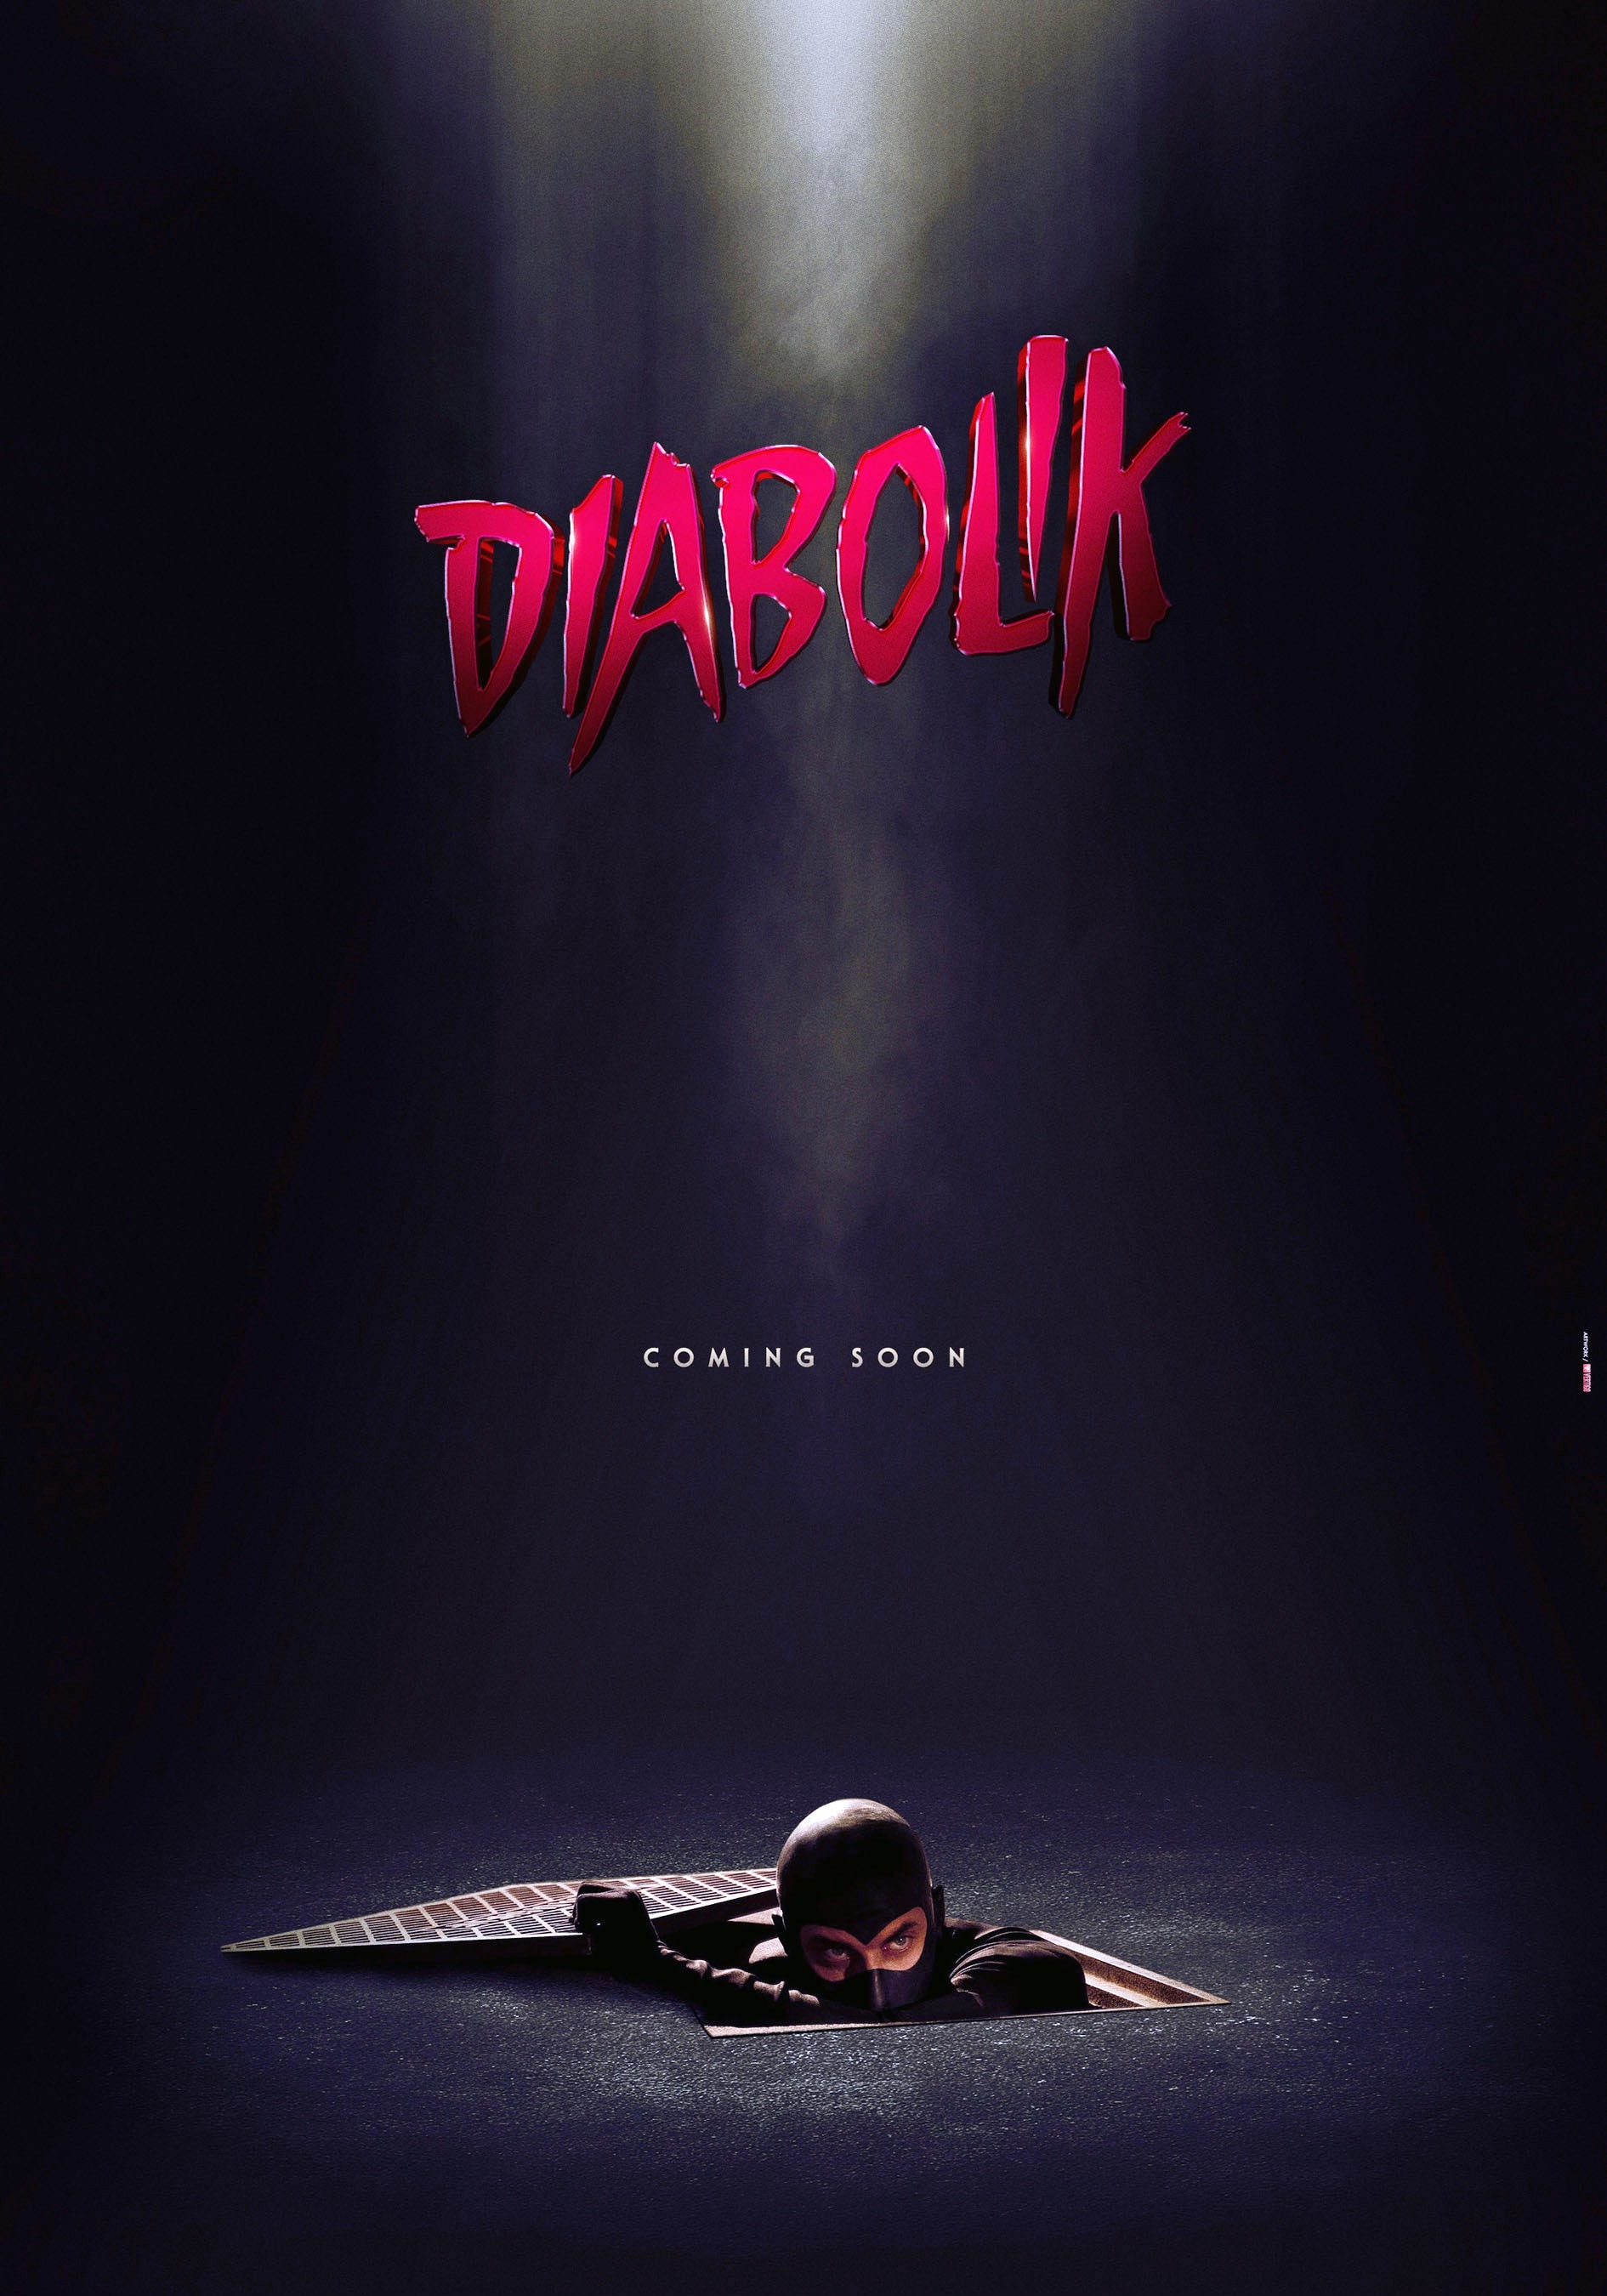 La locandina del film Diabolik, al cinema dal 31 dicembre 2020